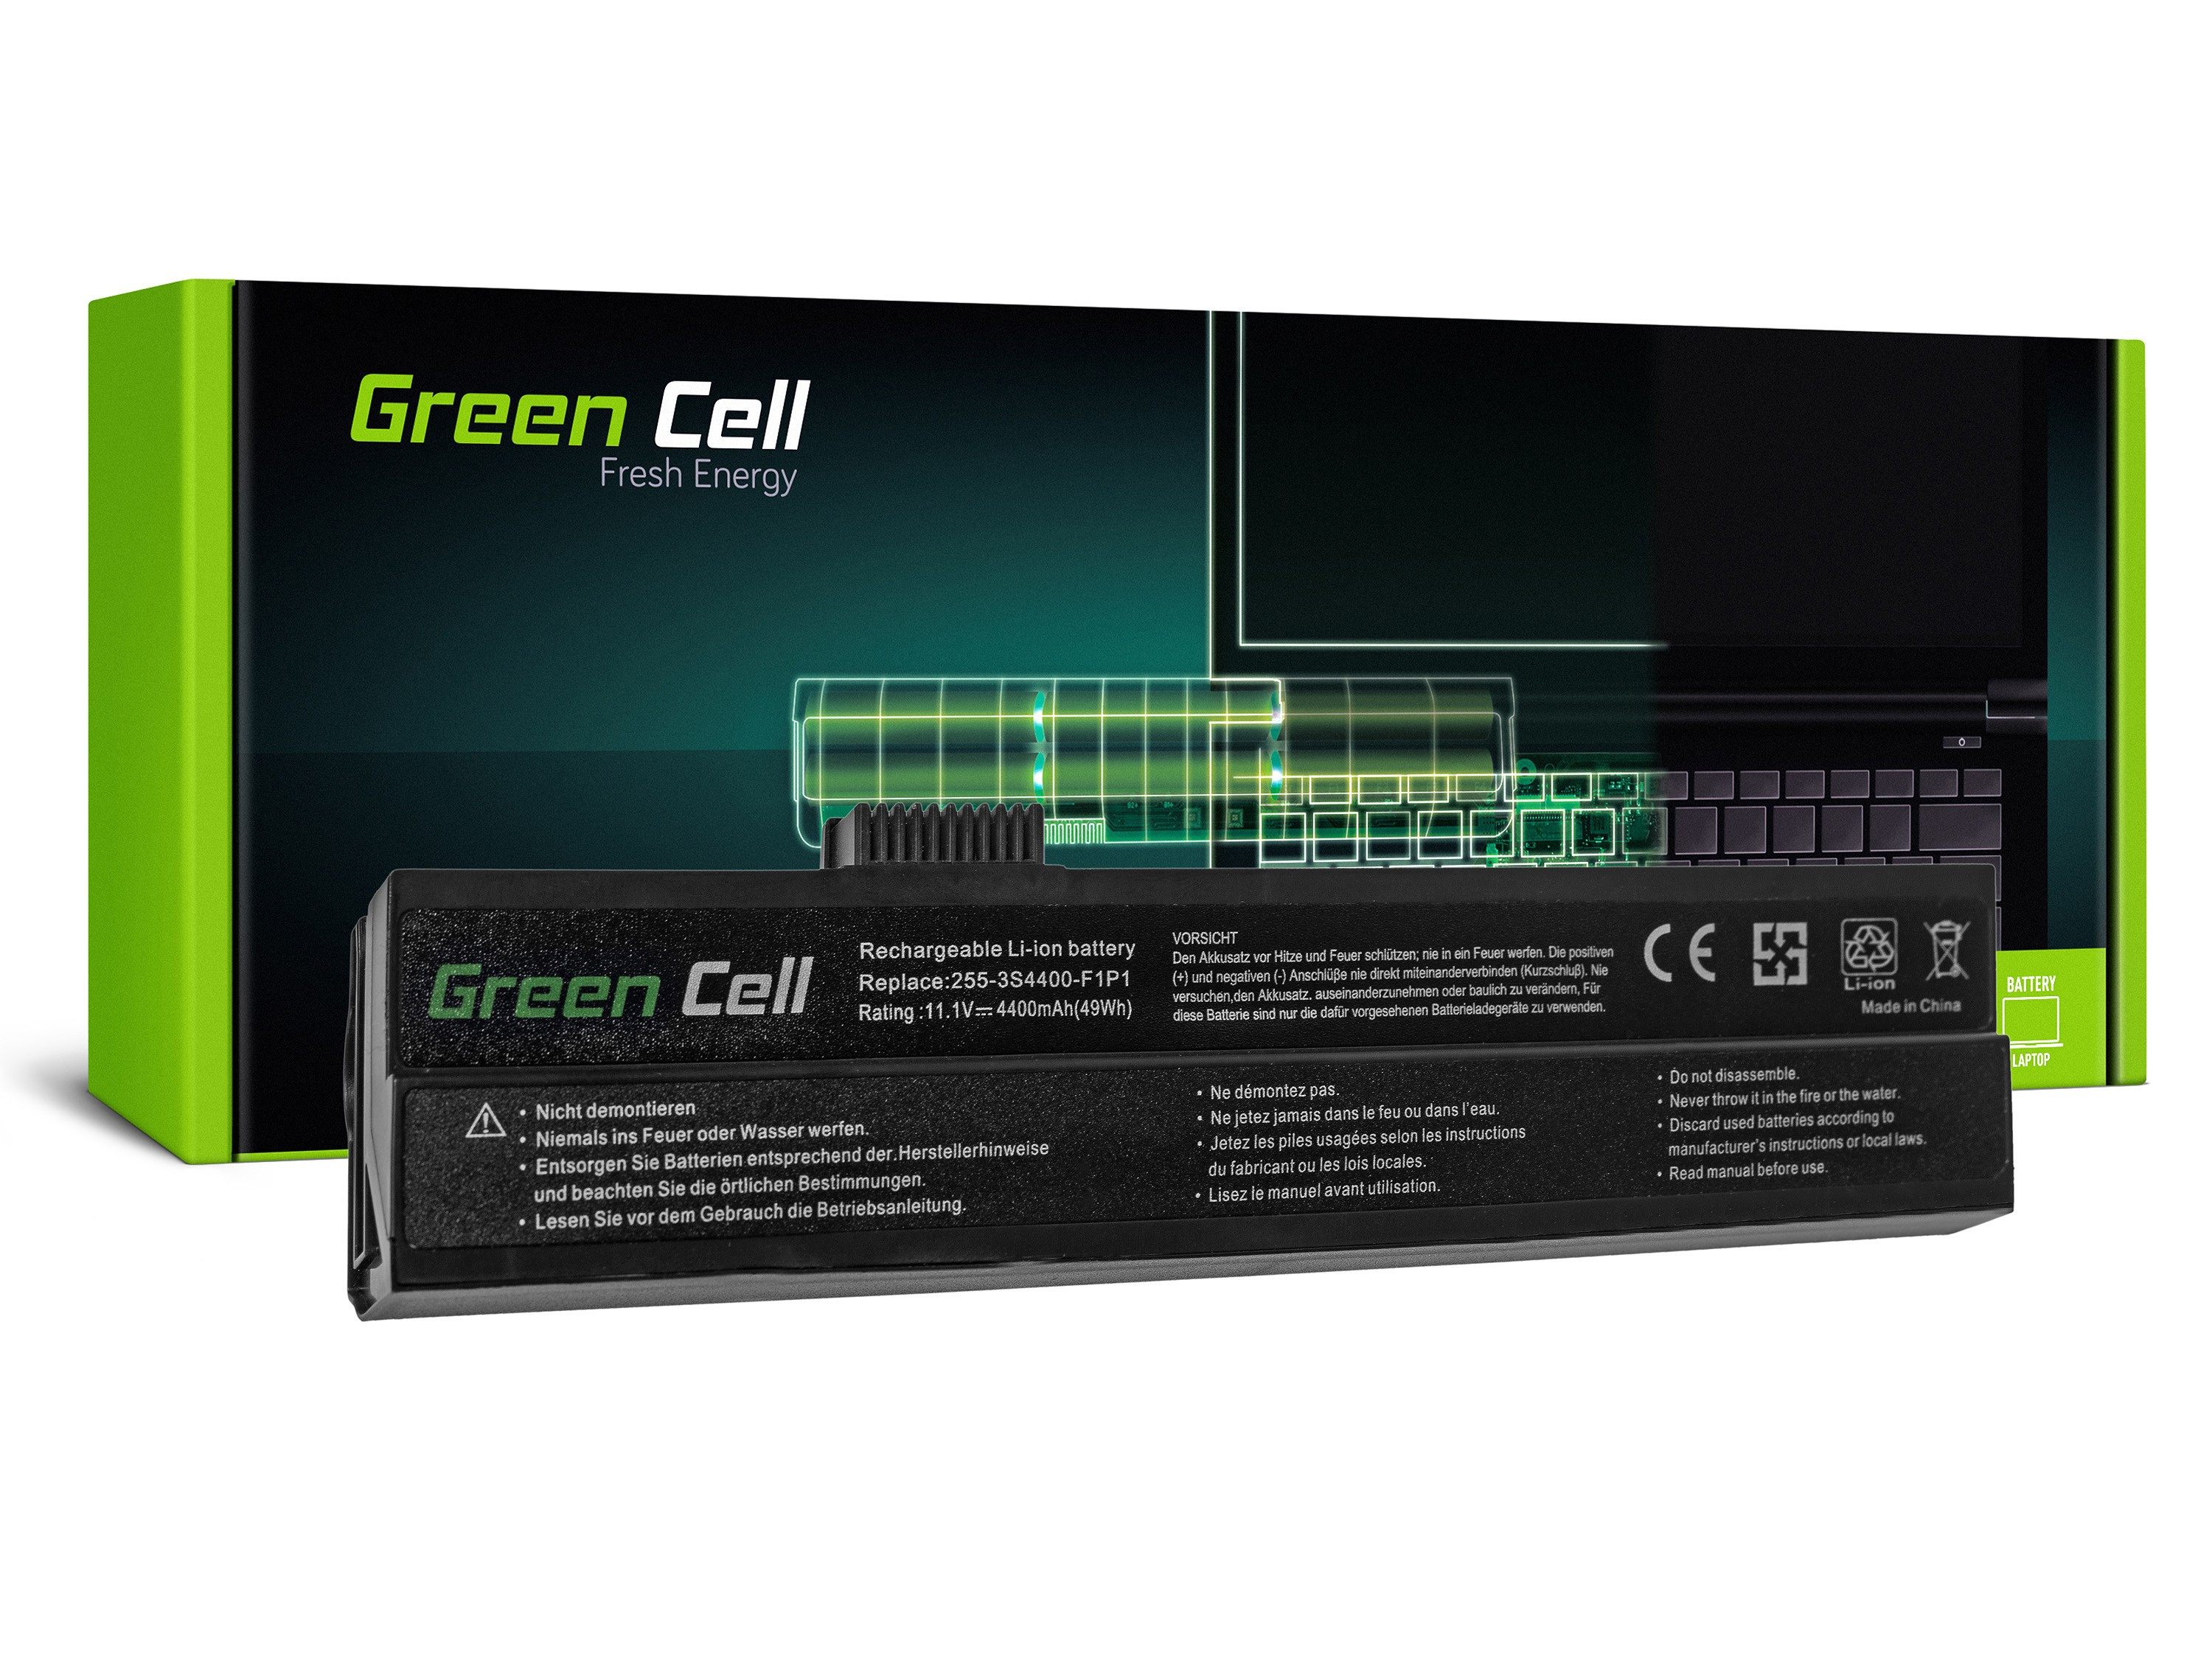 Green Cell FS01 Baterie Fujitsu-Siemens Amilo Pi 1536 1556 A1640 M1405 Unwill 245 255 4400mAh Li-Ion